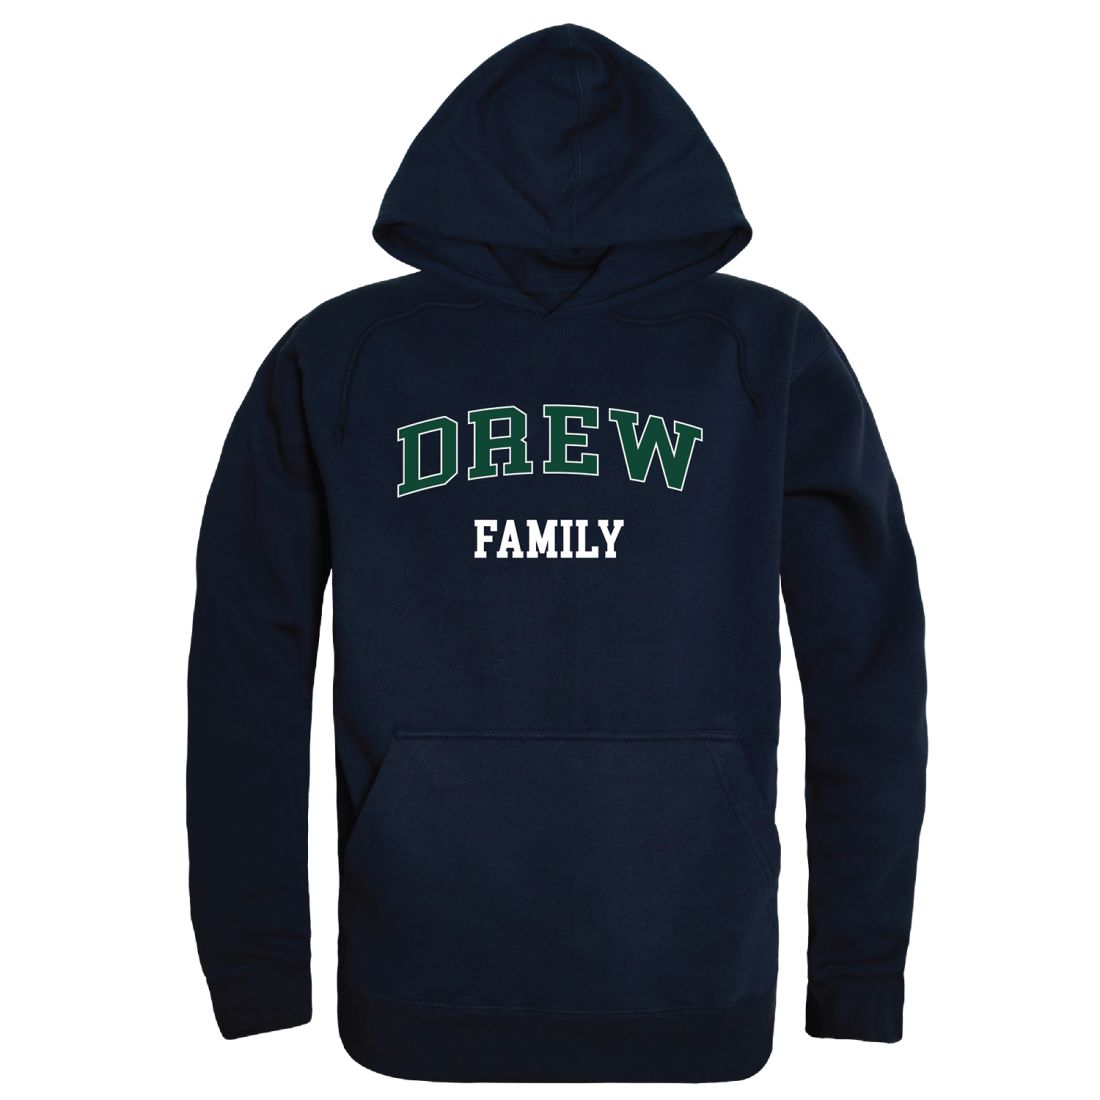 Drew University Rangers Family Hoodie Sweatshirts